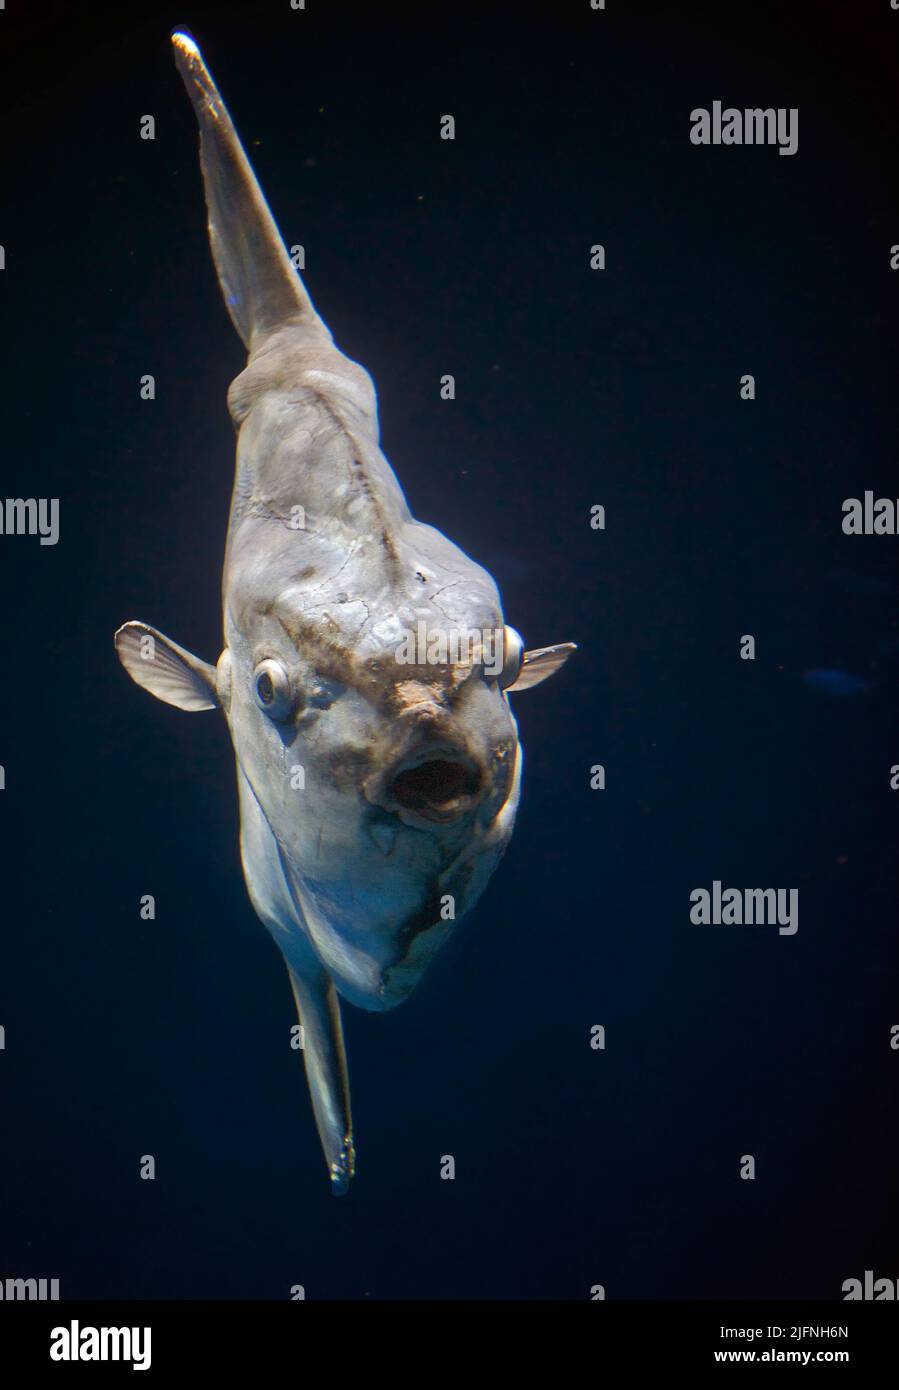 Sunfish aquarium hi-res stock photography and images - Alamy